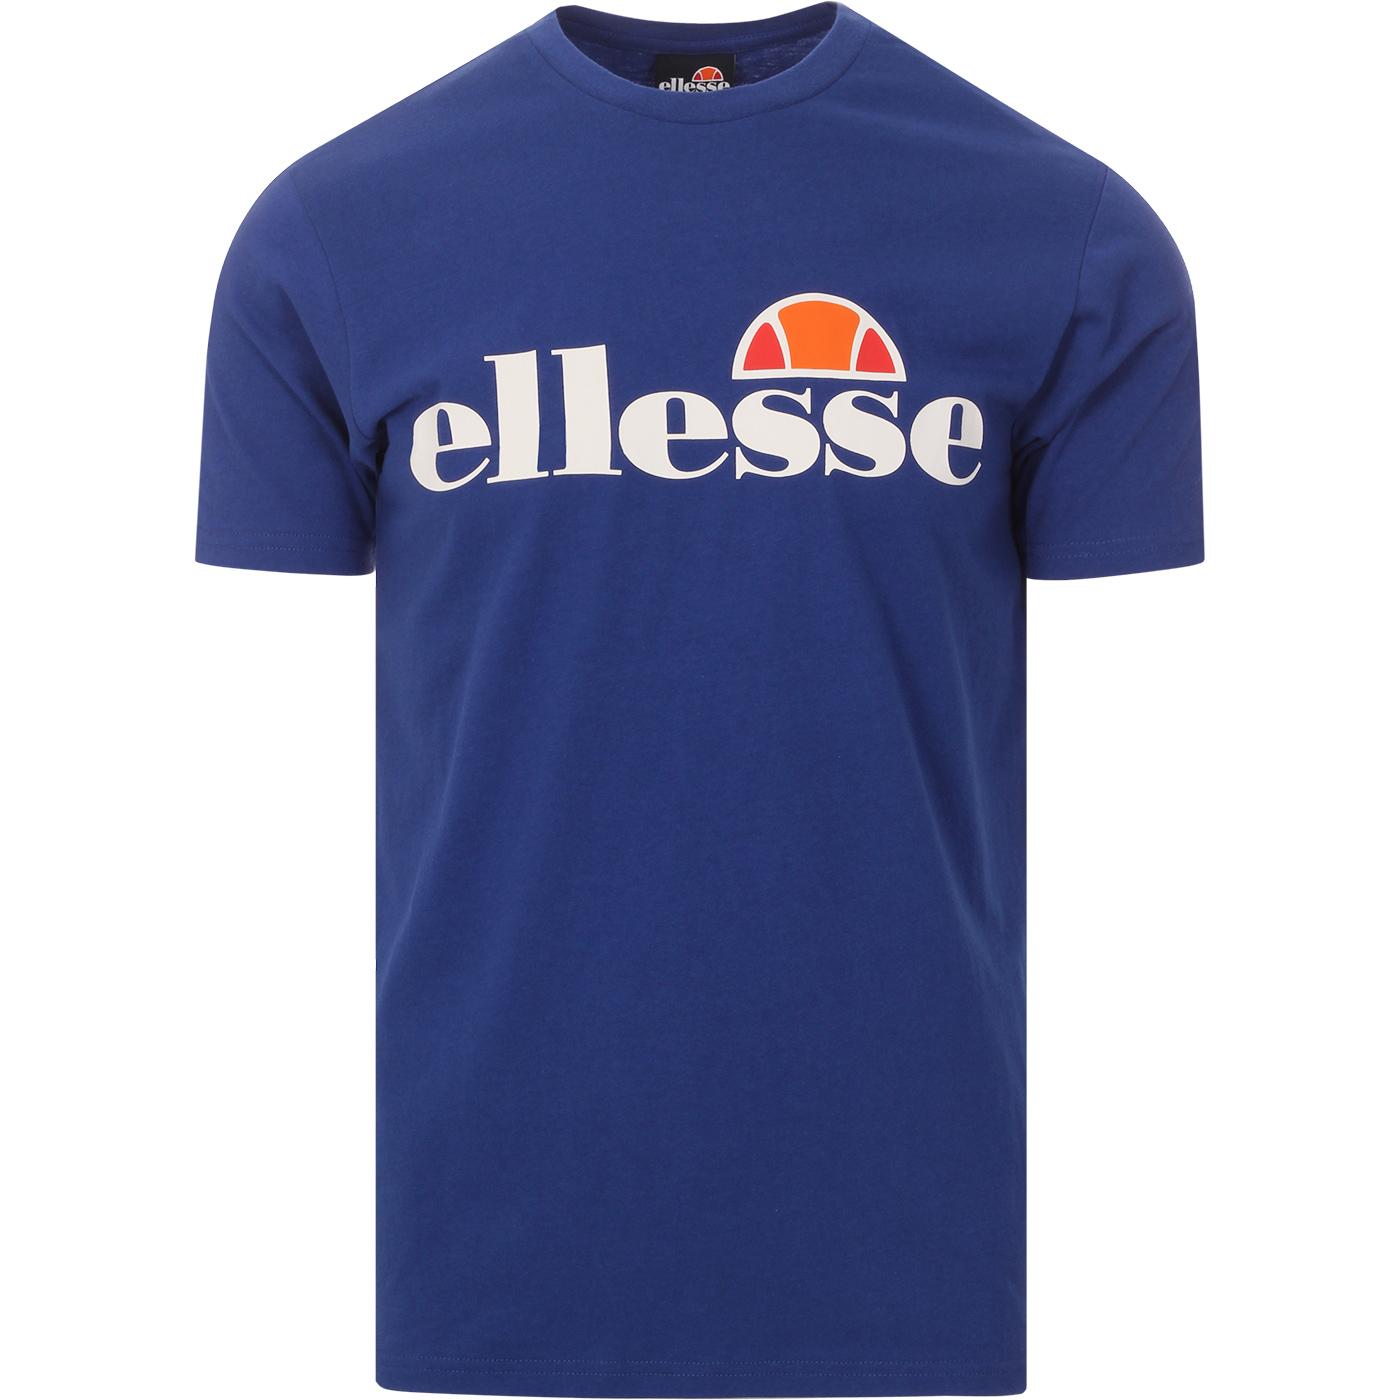 Prado ELLESSE Men's Retro 80s Logo Crew Tee (Blue)